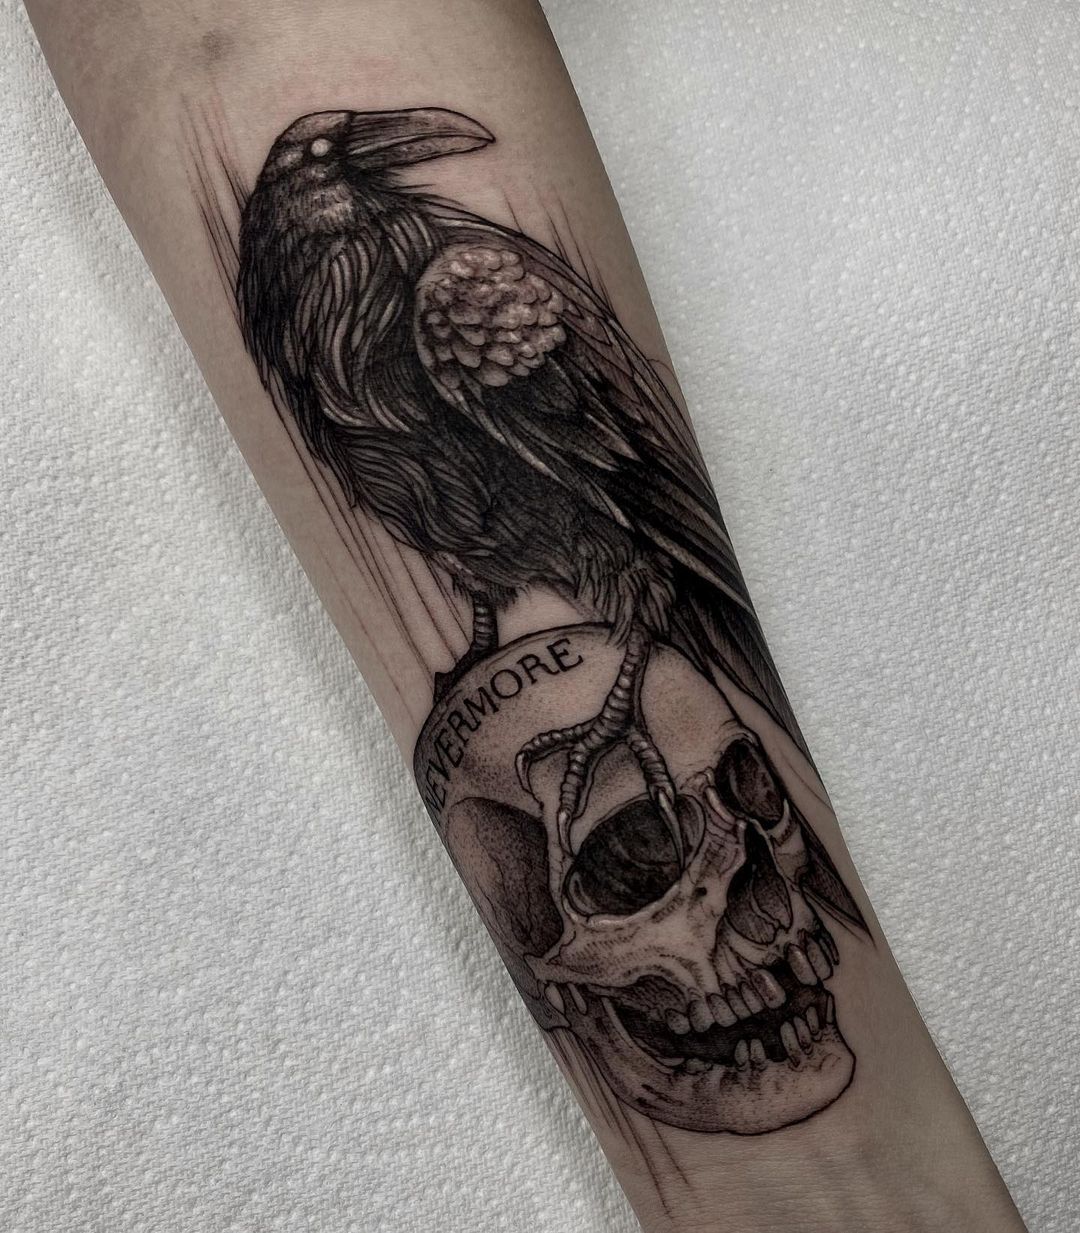 Koit Raven tattoo | Tattoos, Cool arm tattoos, Third eye tattoos